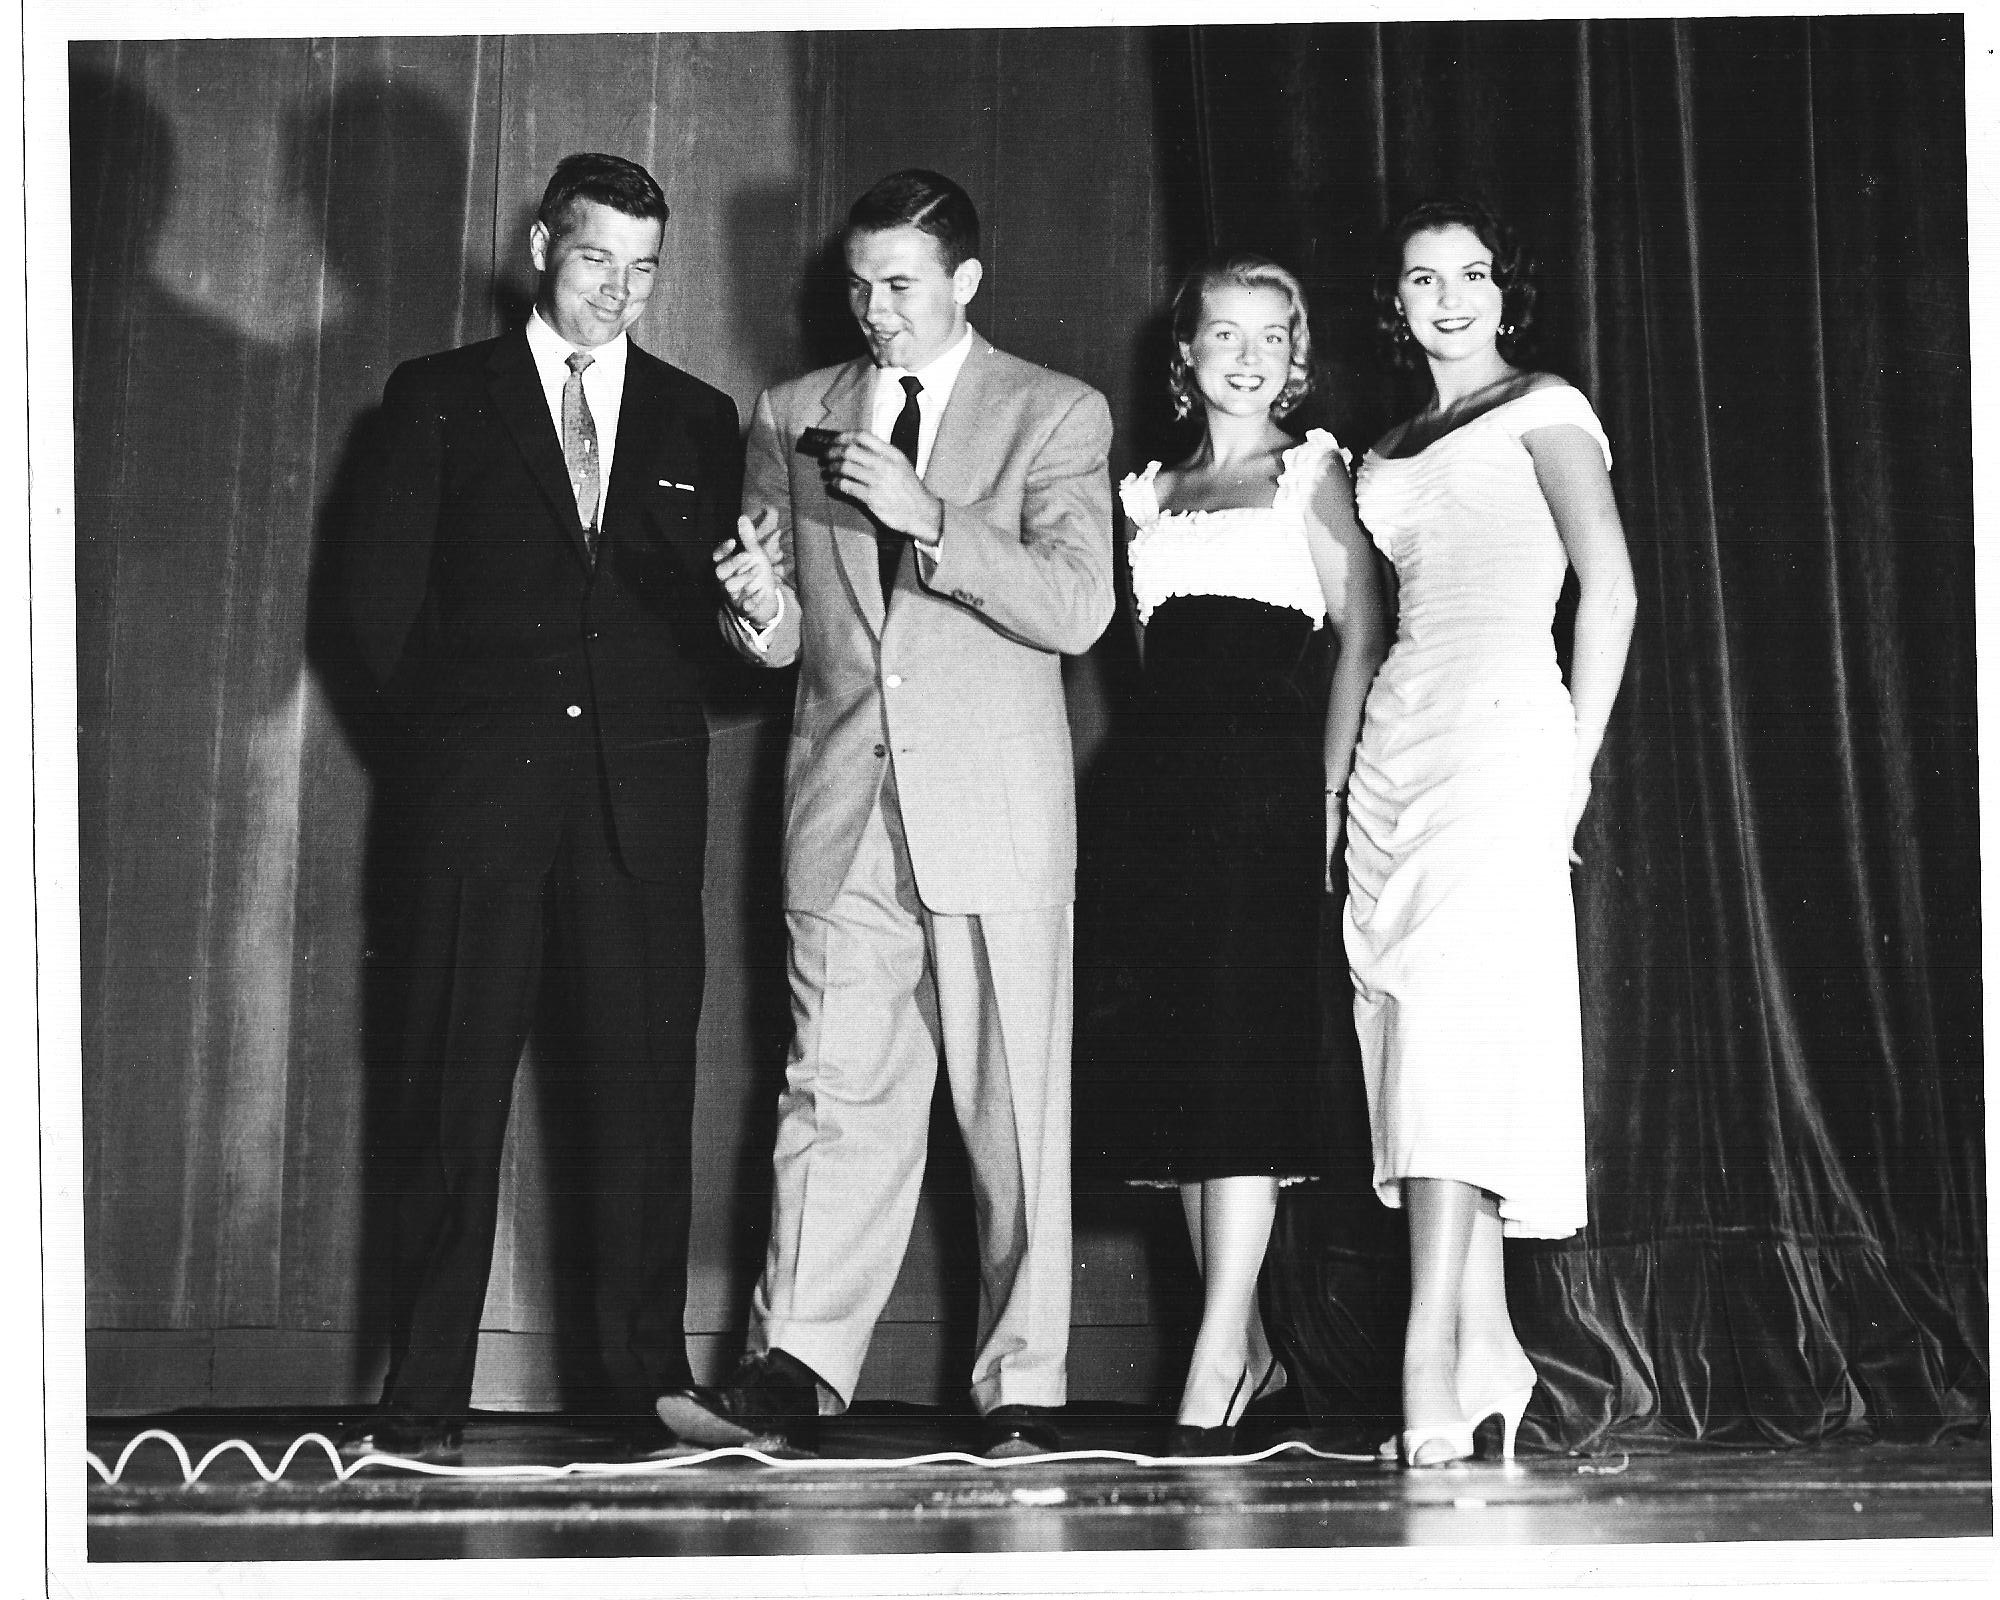 Chicago Press Photographers' Reggie Dombeck,Miss Photoflash 1955 with Diane Danniggelis,Miss Photoflash Chicago 1956; Detroit Tigers Frank House, Bob Miller on 1956 USO Korea/Japan Tour